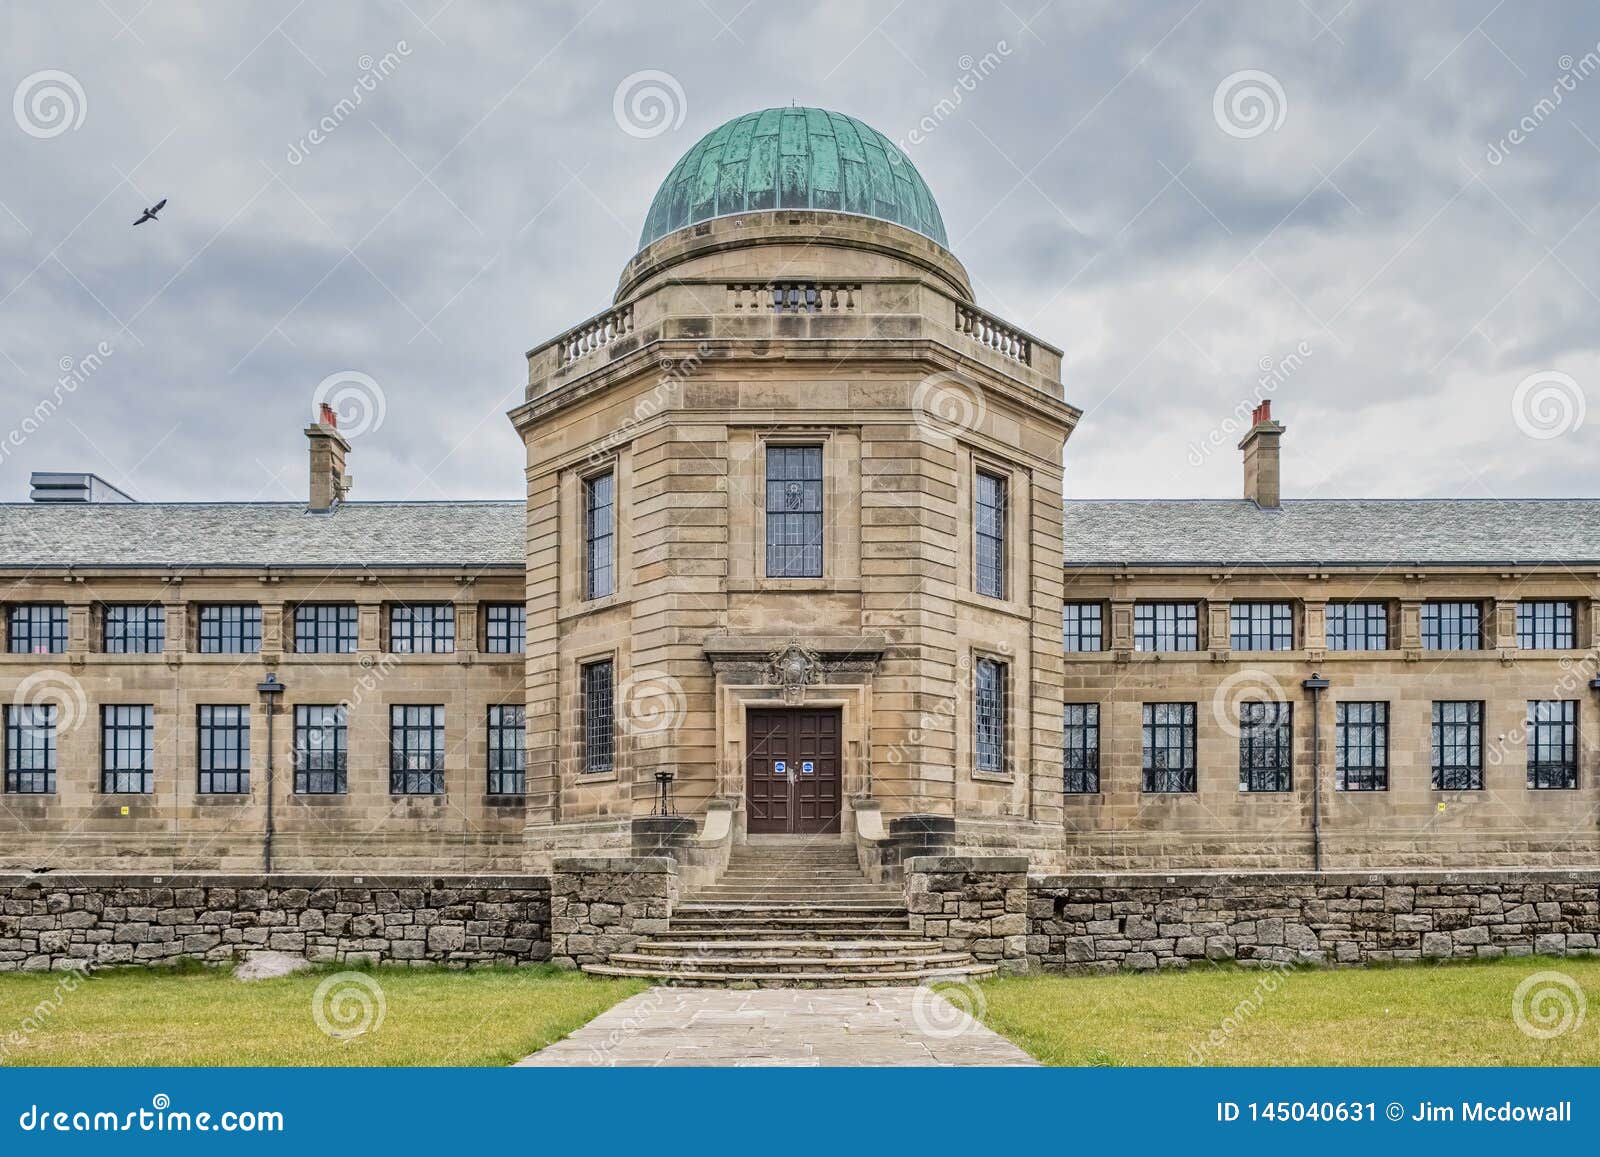 Impressive Architecture Marr College Buildings Troon Scotland